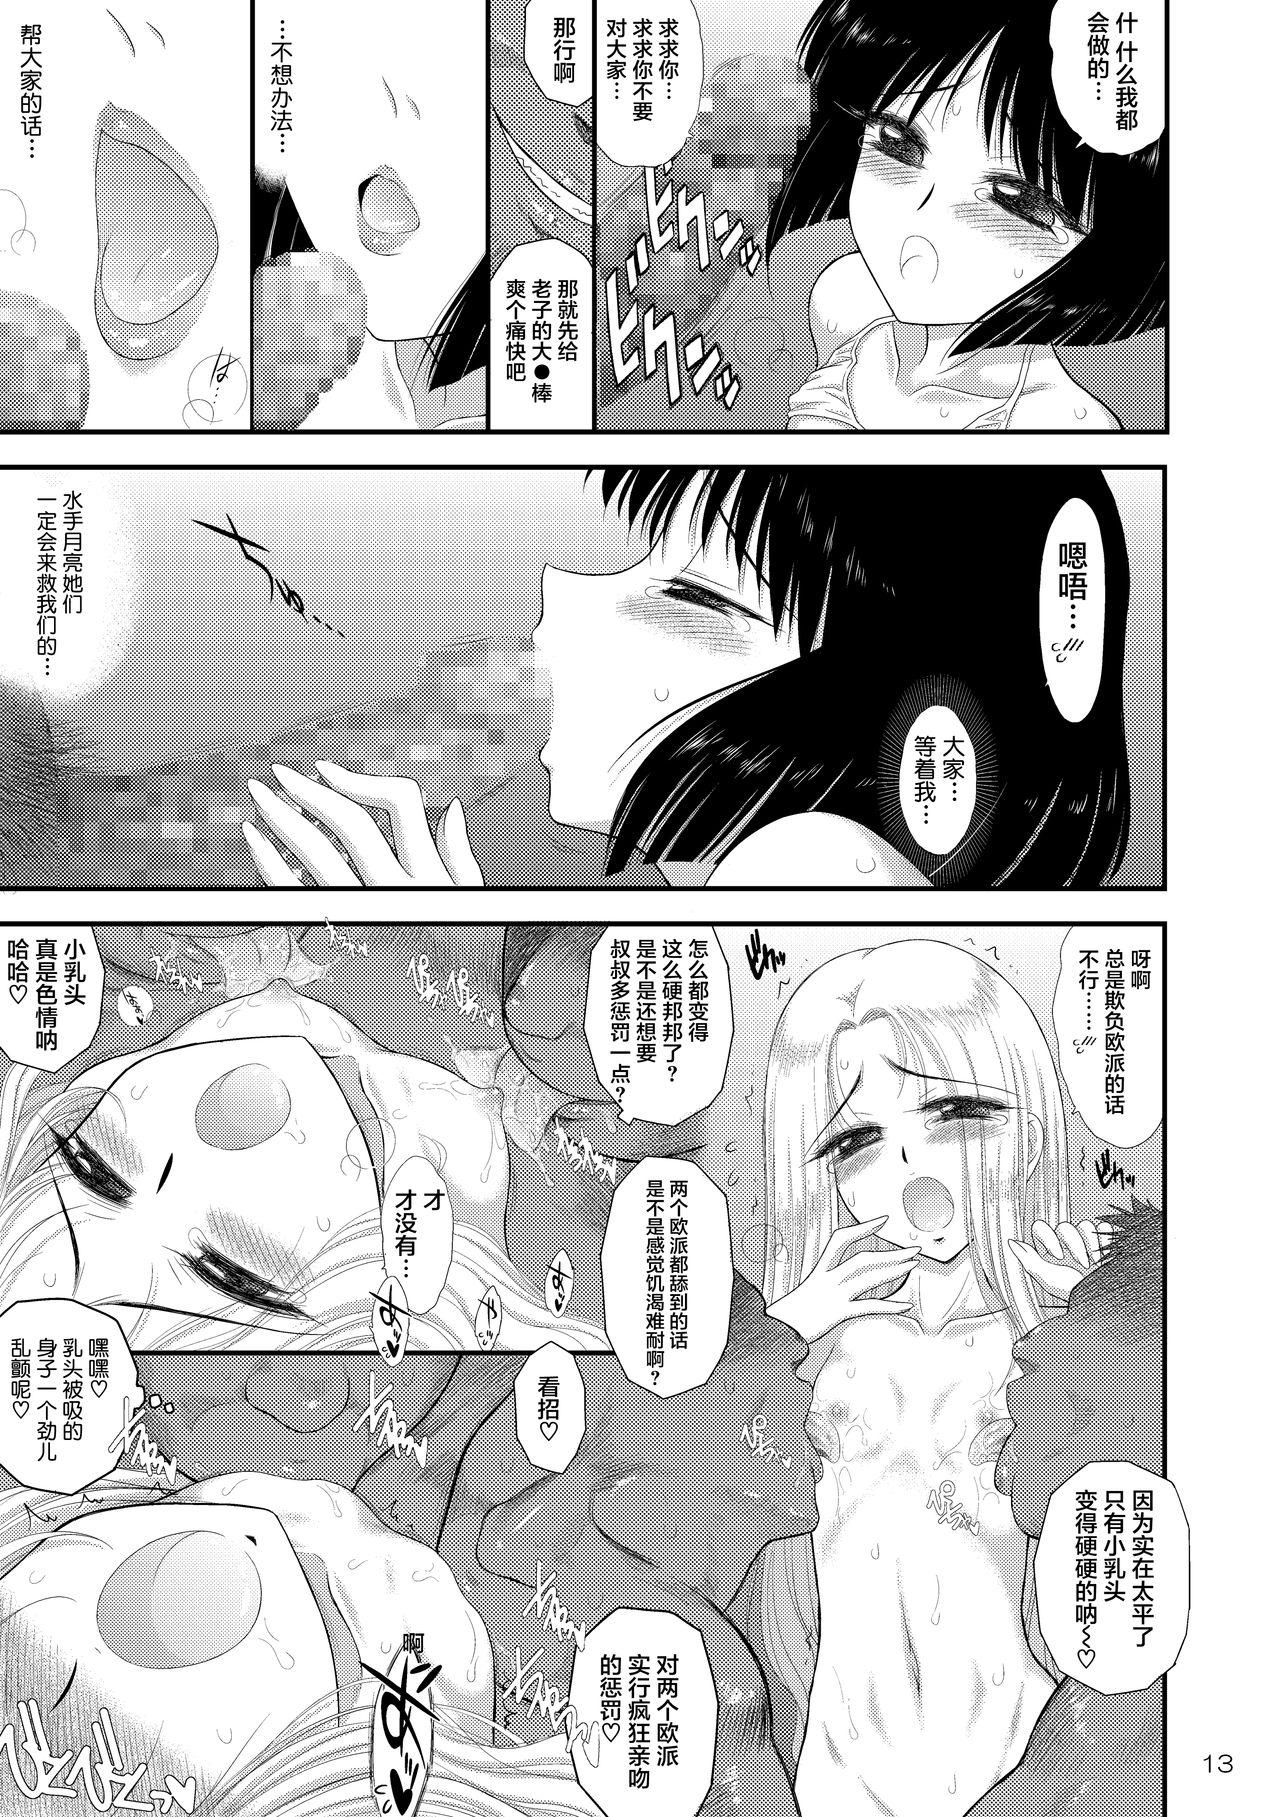 Doggy Doyoubi no Joshi wa Gaman Dekinai - Sailor moon Body Massage - Page 13